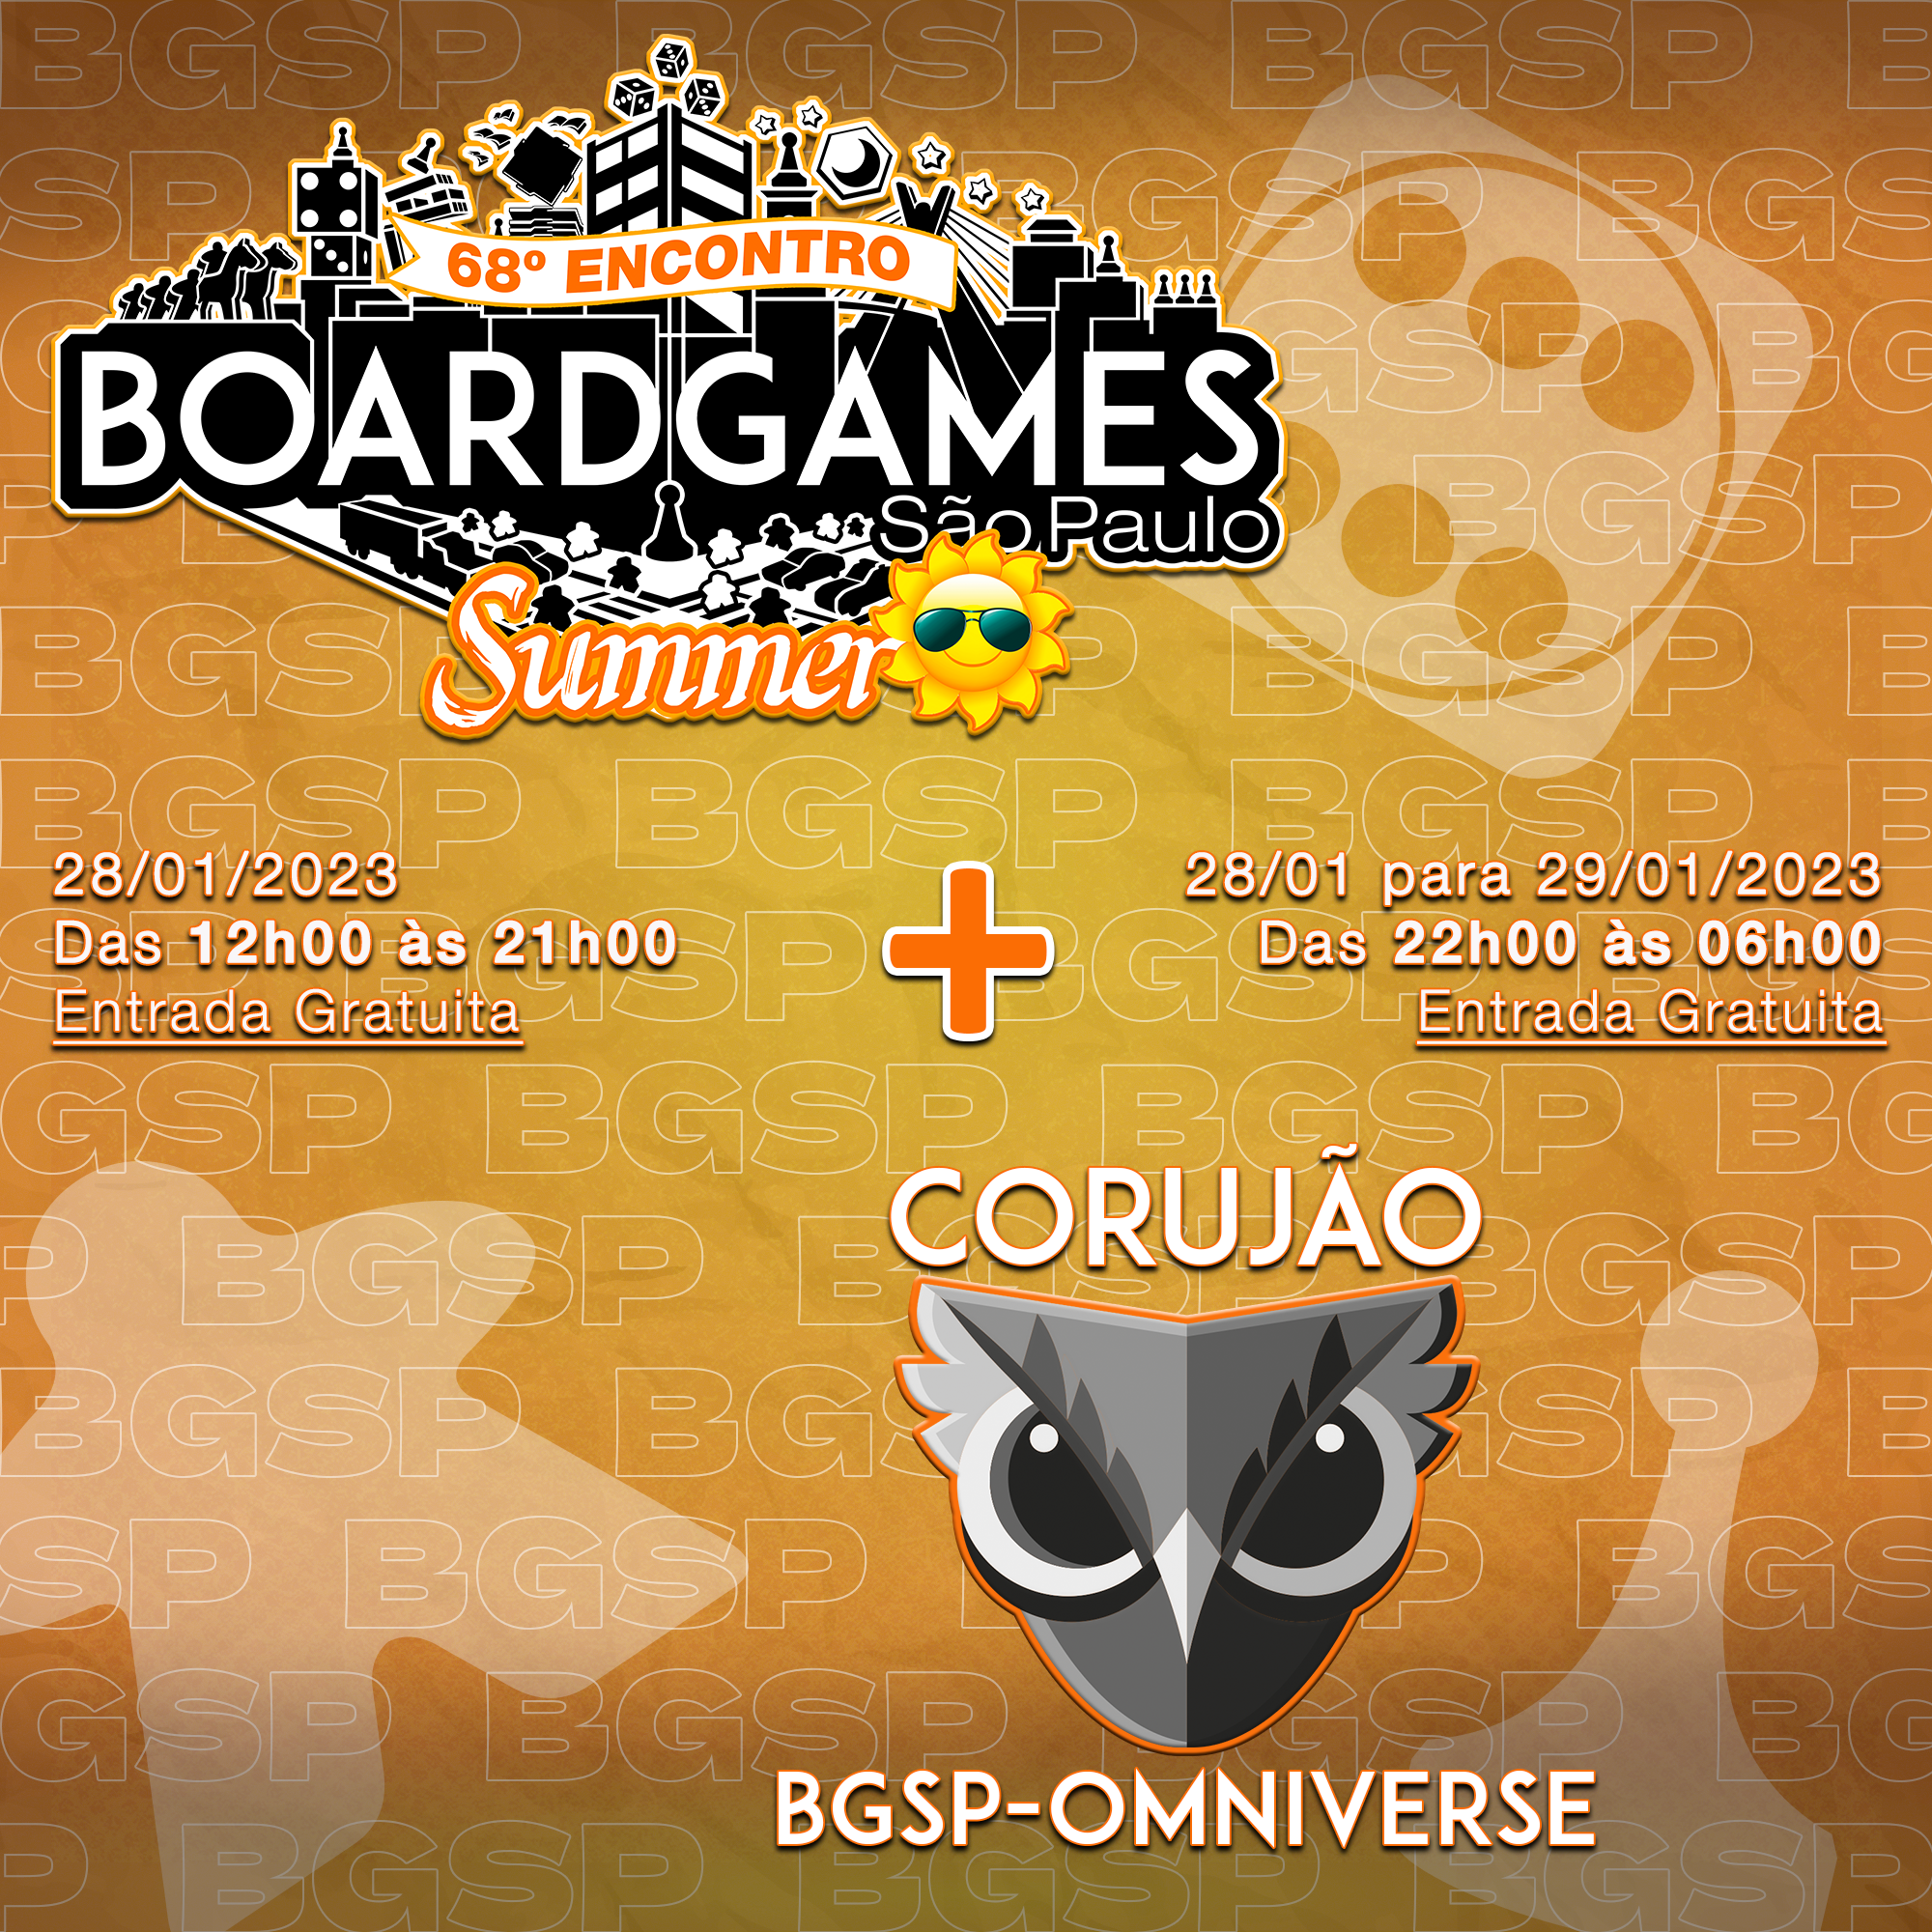 Corujão Games